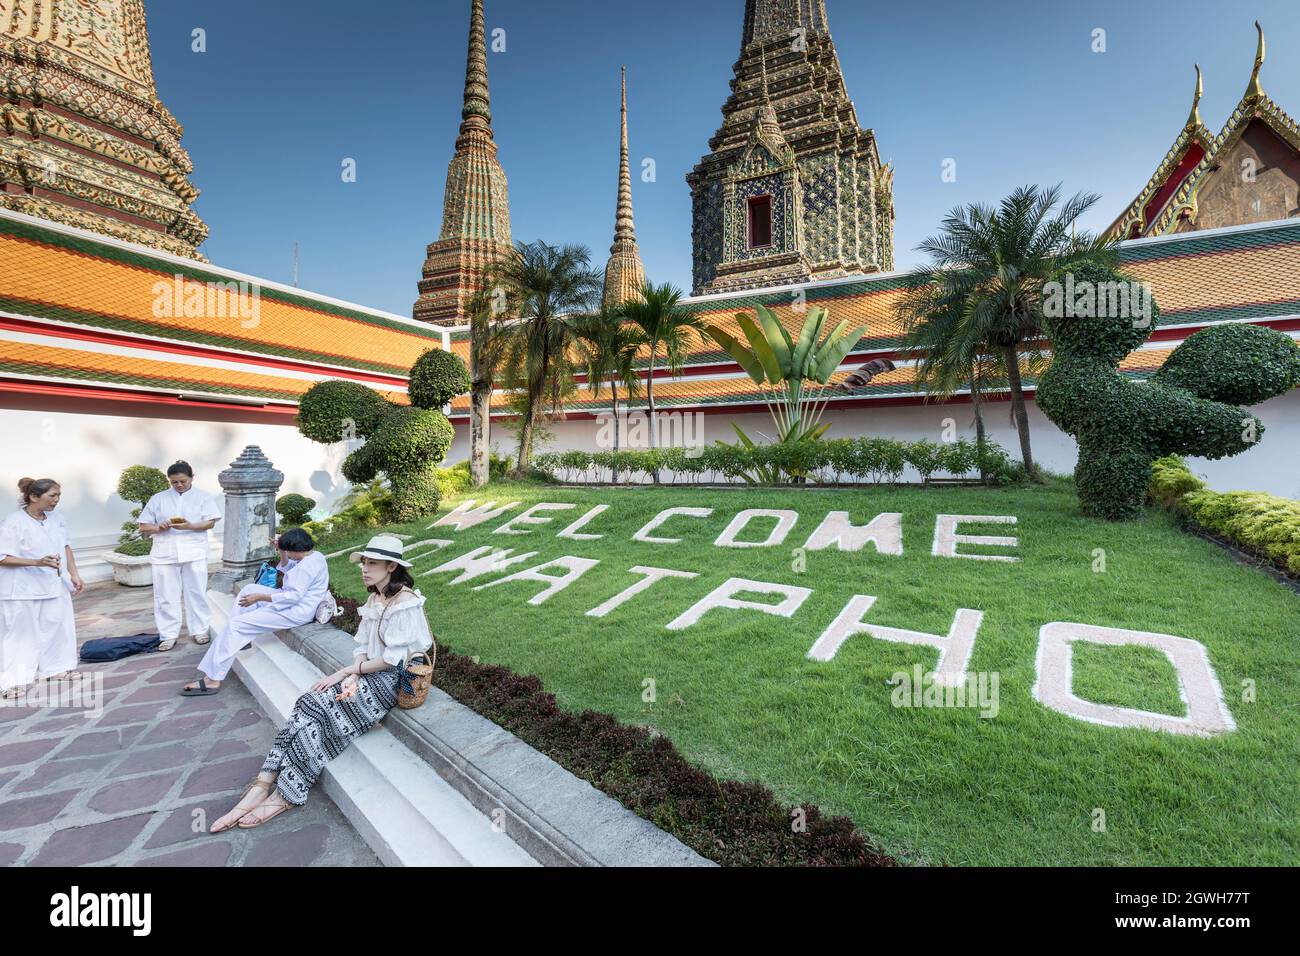 Wat Pho temple welcome sign, Bangkok, Thailand Stock Photo